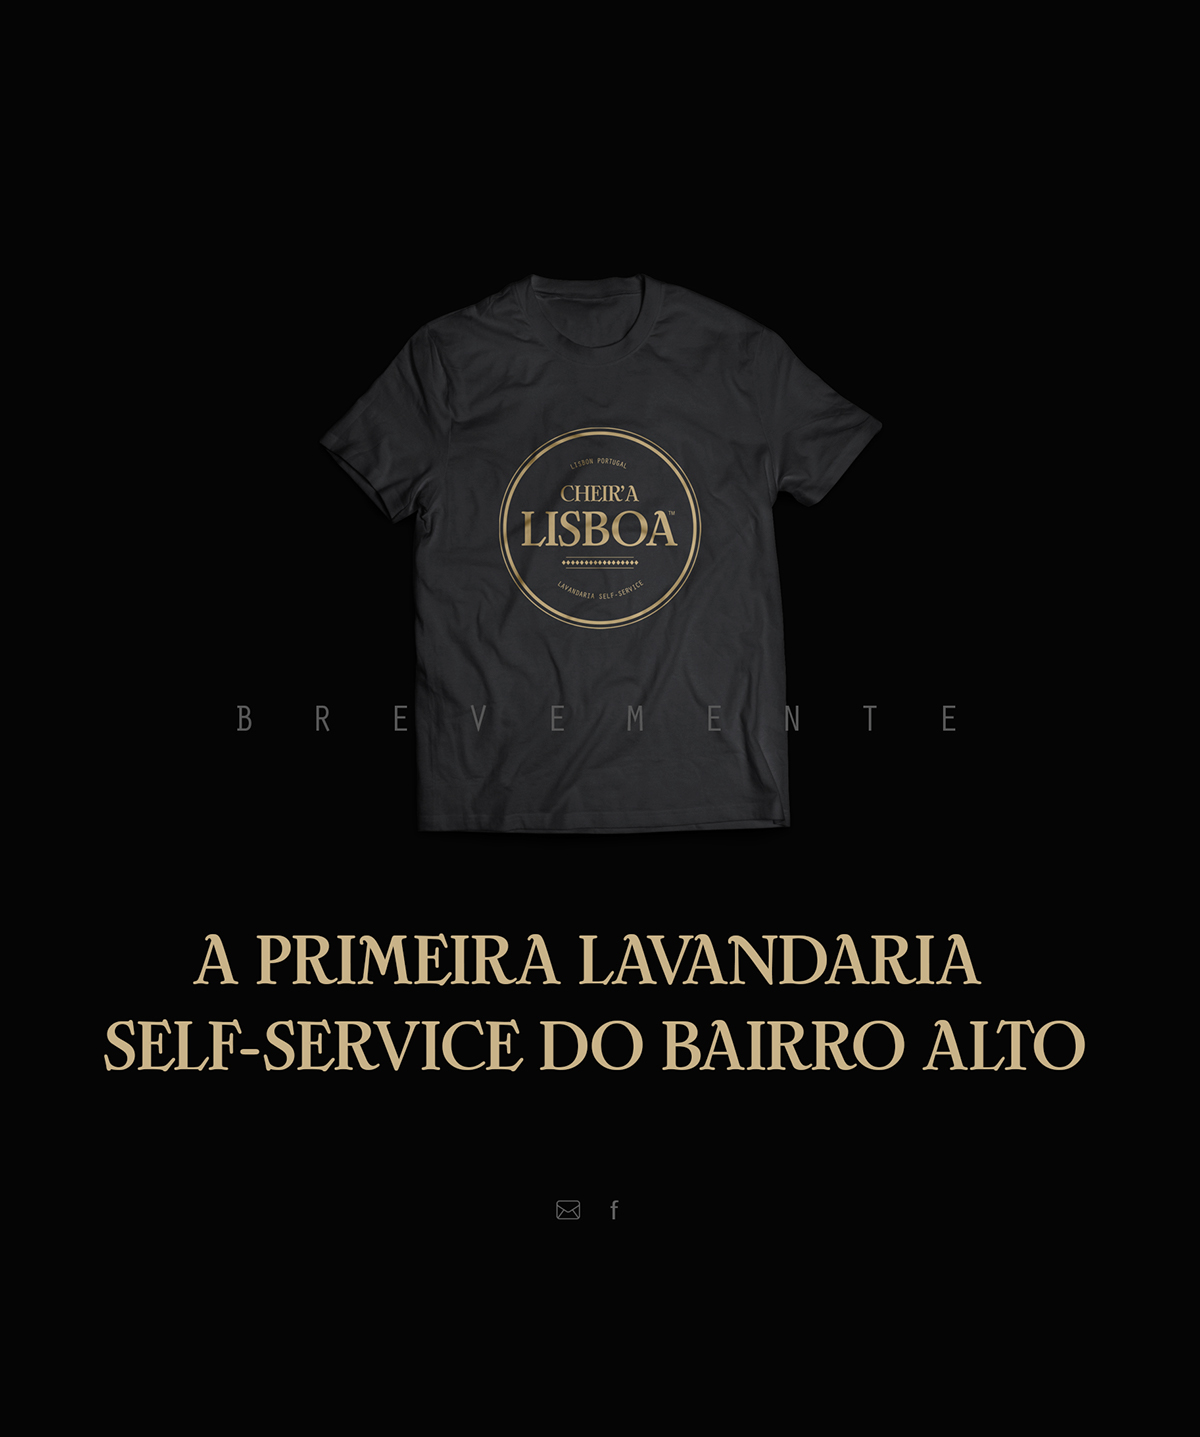 Miguel Batista Nektar Brand Advertisers lisboa Lisbon design ID Cheir'a Lisboa self-service Washing Portugal